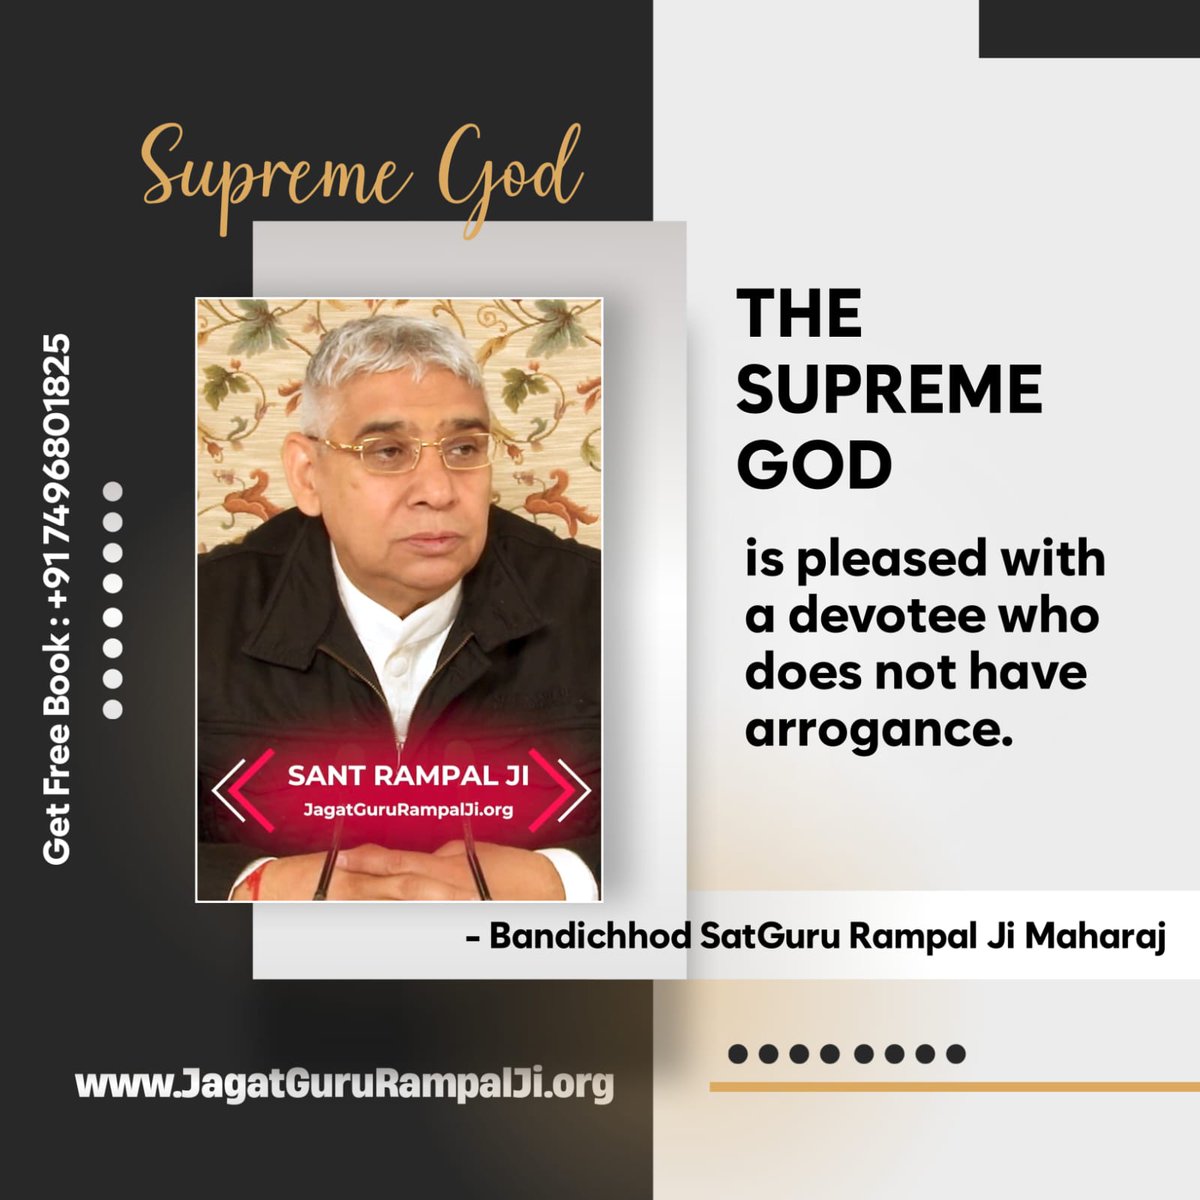 #GodMorningFriday
🌺🌺
The Supreme God is pleased with a devotee who does not have arrogance.
🙇🙇
Jagat Guru Tatvadarshi Sant Rampal Ji Maharaj